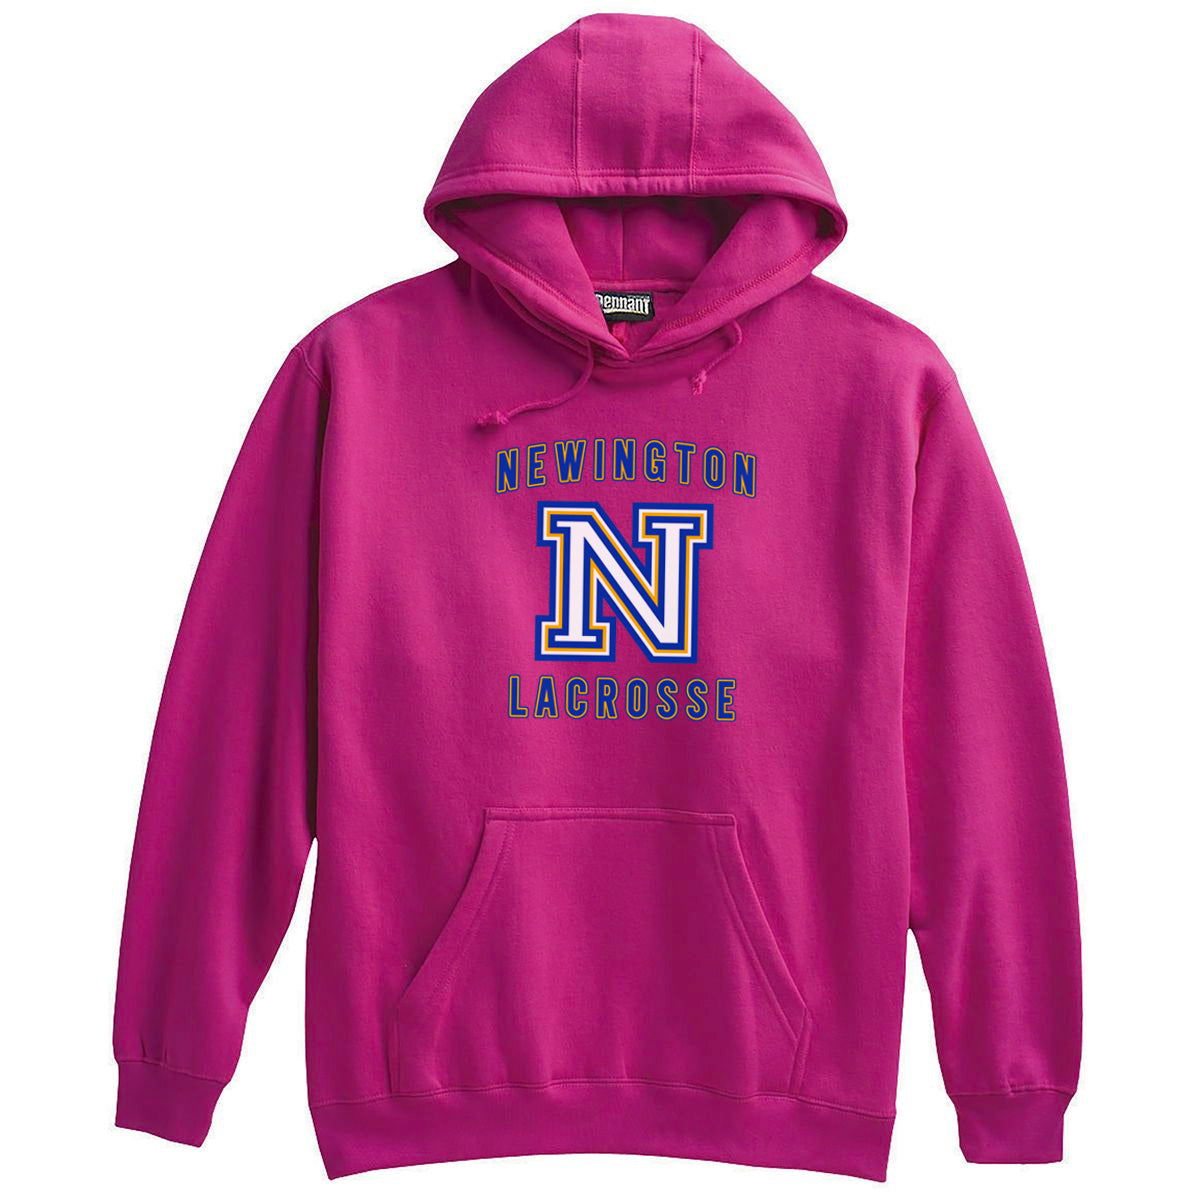 Newington Lacrosse Pink Fuchsia Sweatshirt